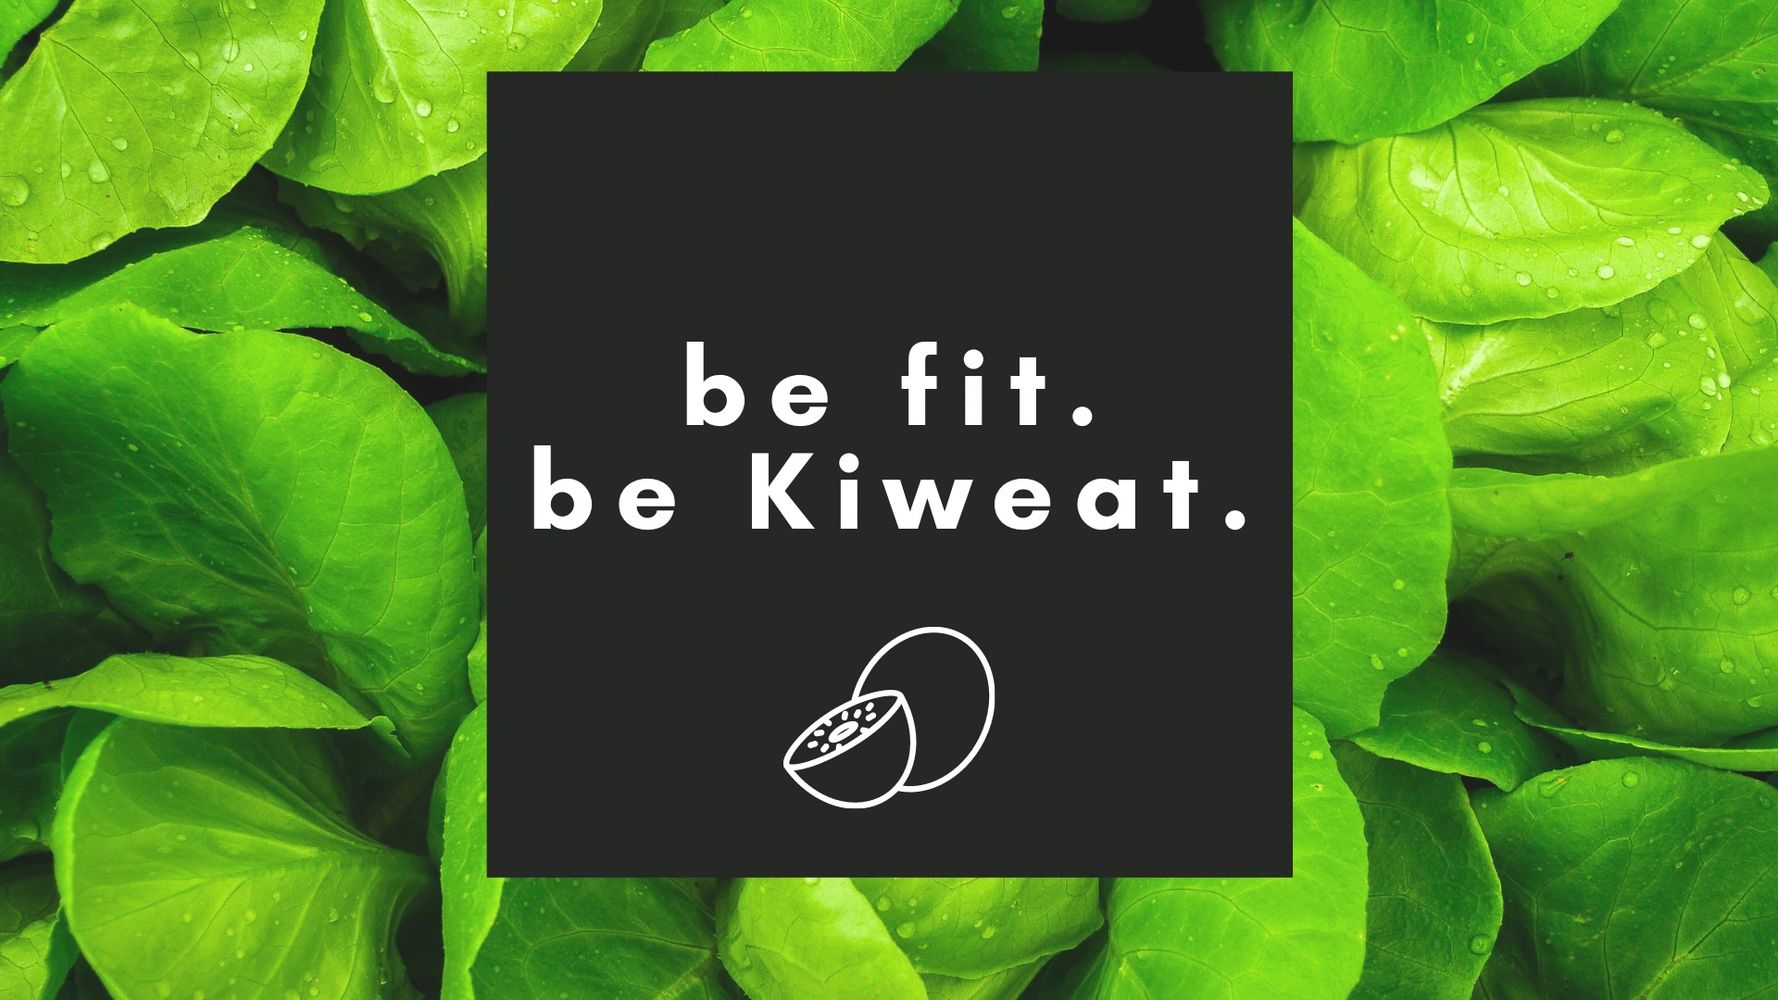 be fit kiweat kiwi healthy kiweat edhec bba project neo lejeune usa kiwi lettuce healthy livraison